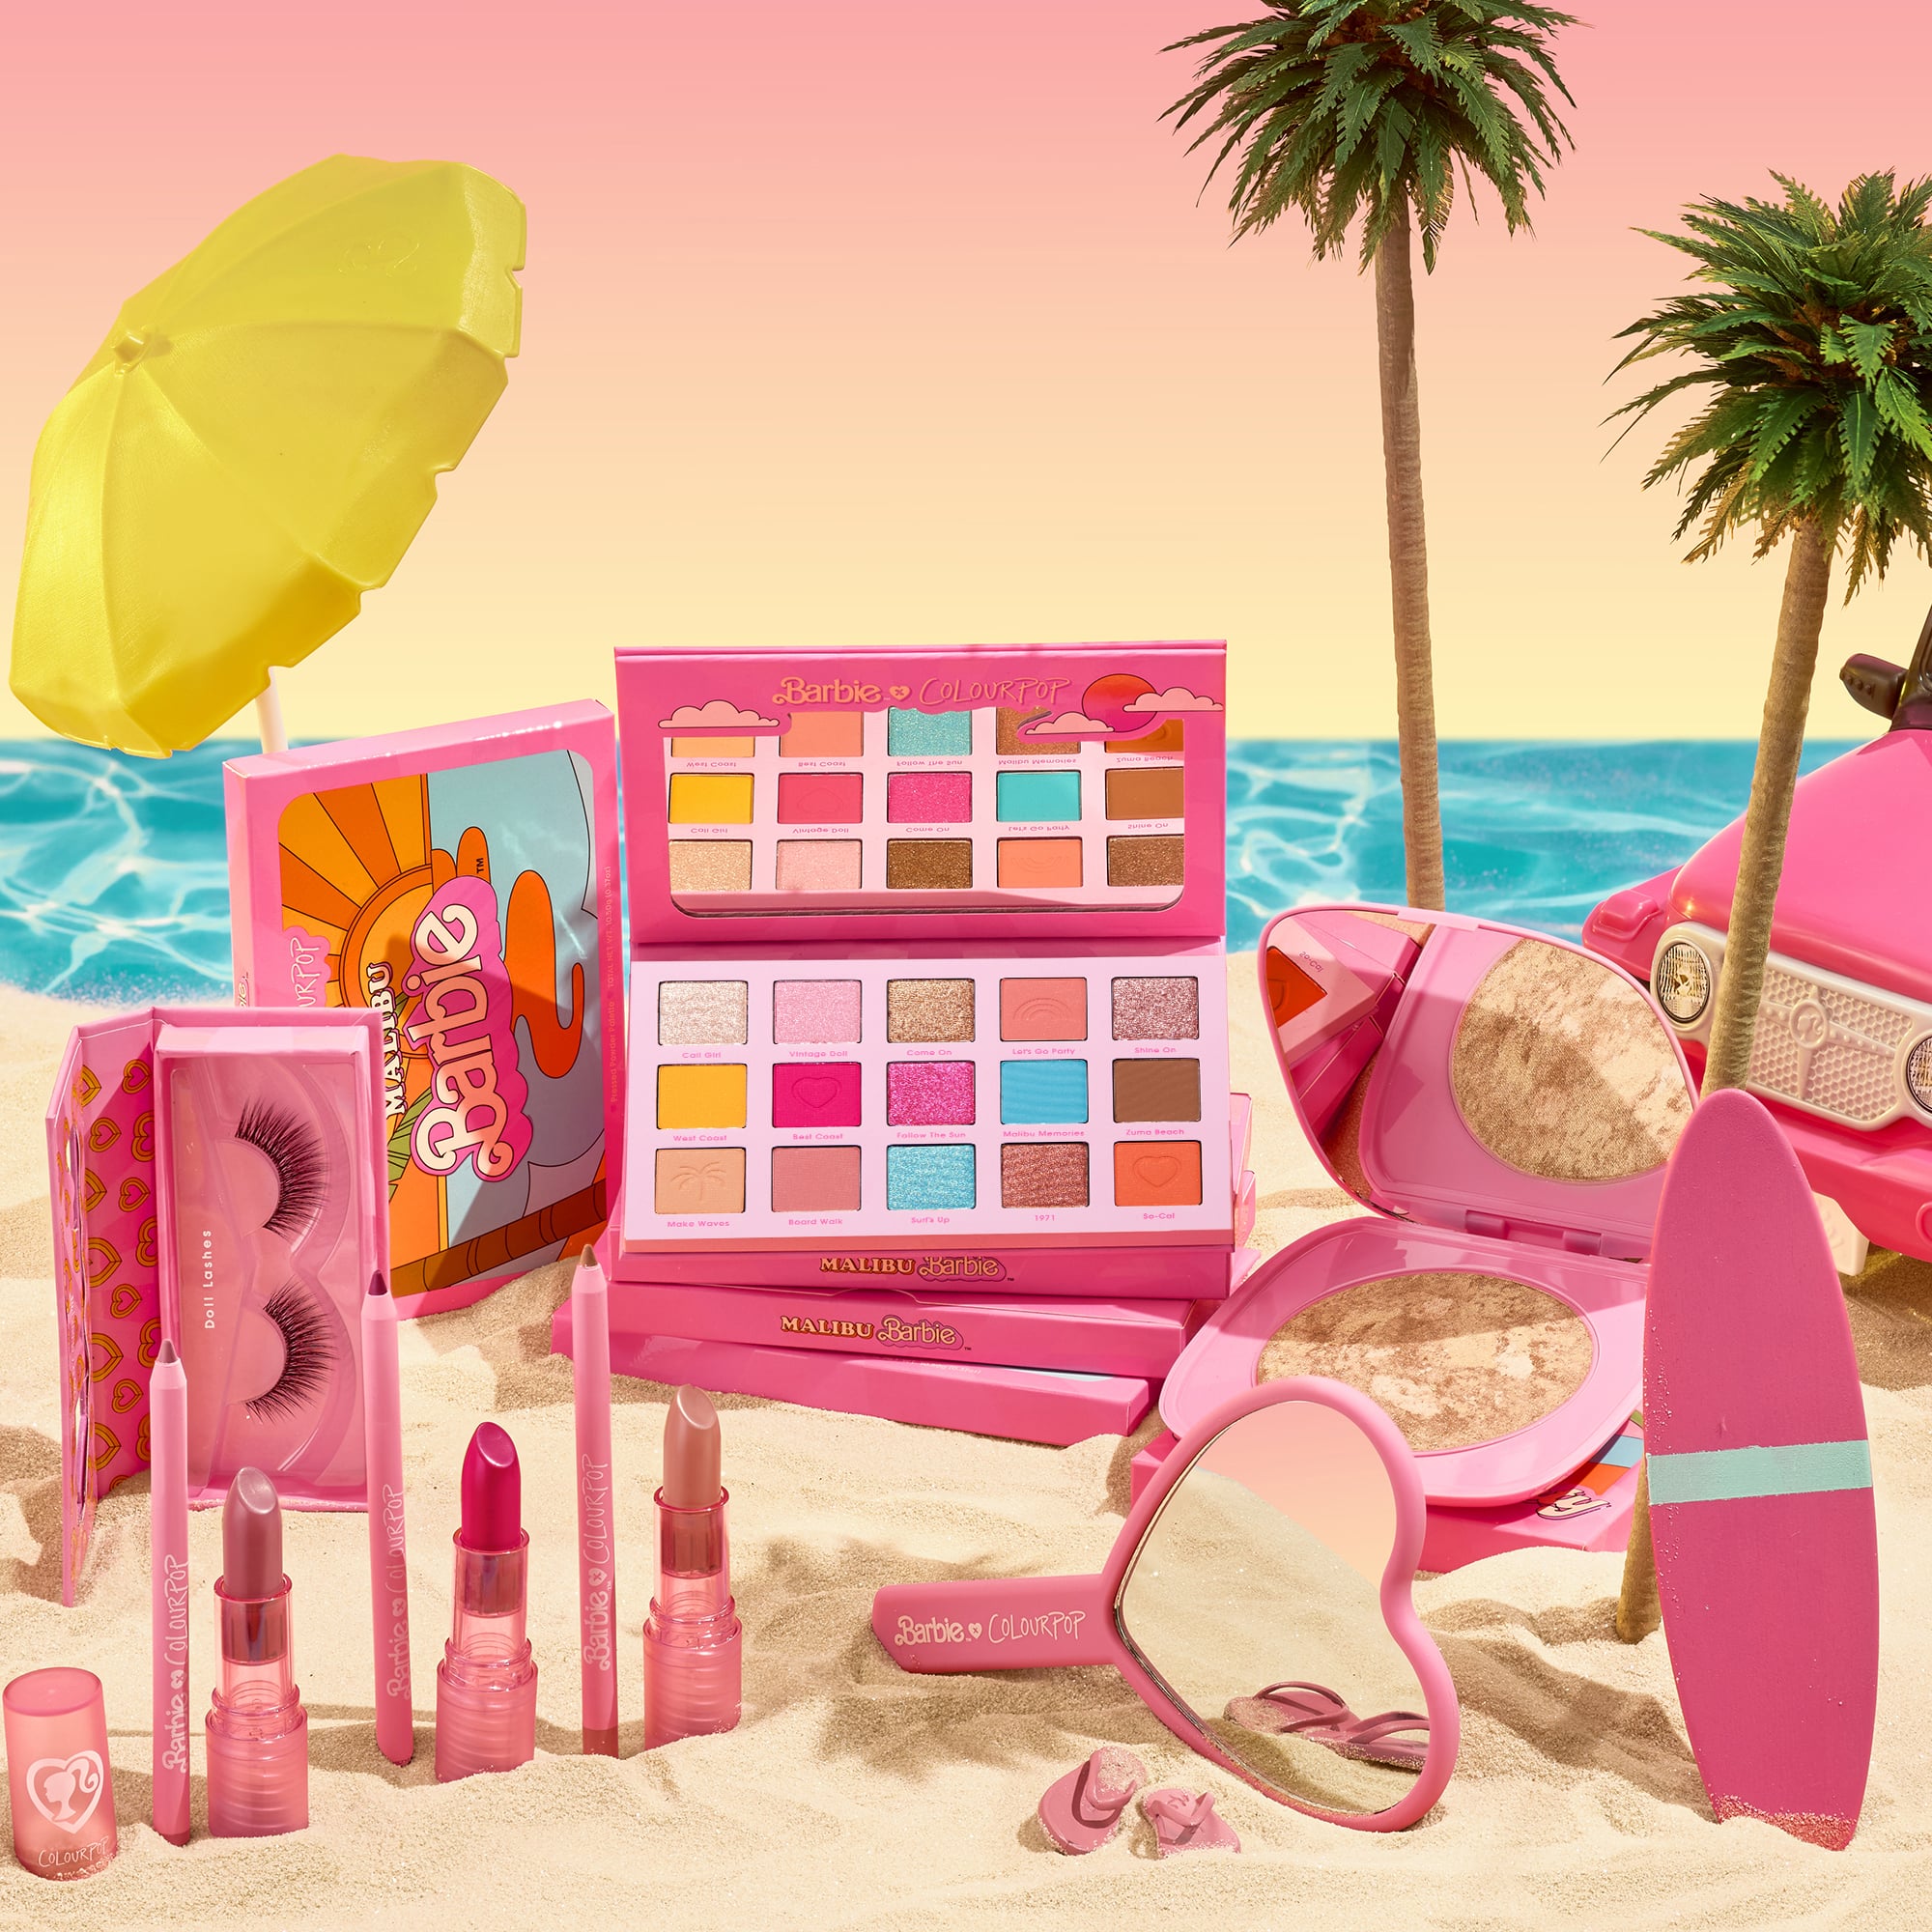 Colourpop Released a Barbie Makeup Collection | POPSUGAR Beauty